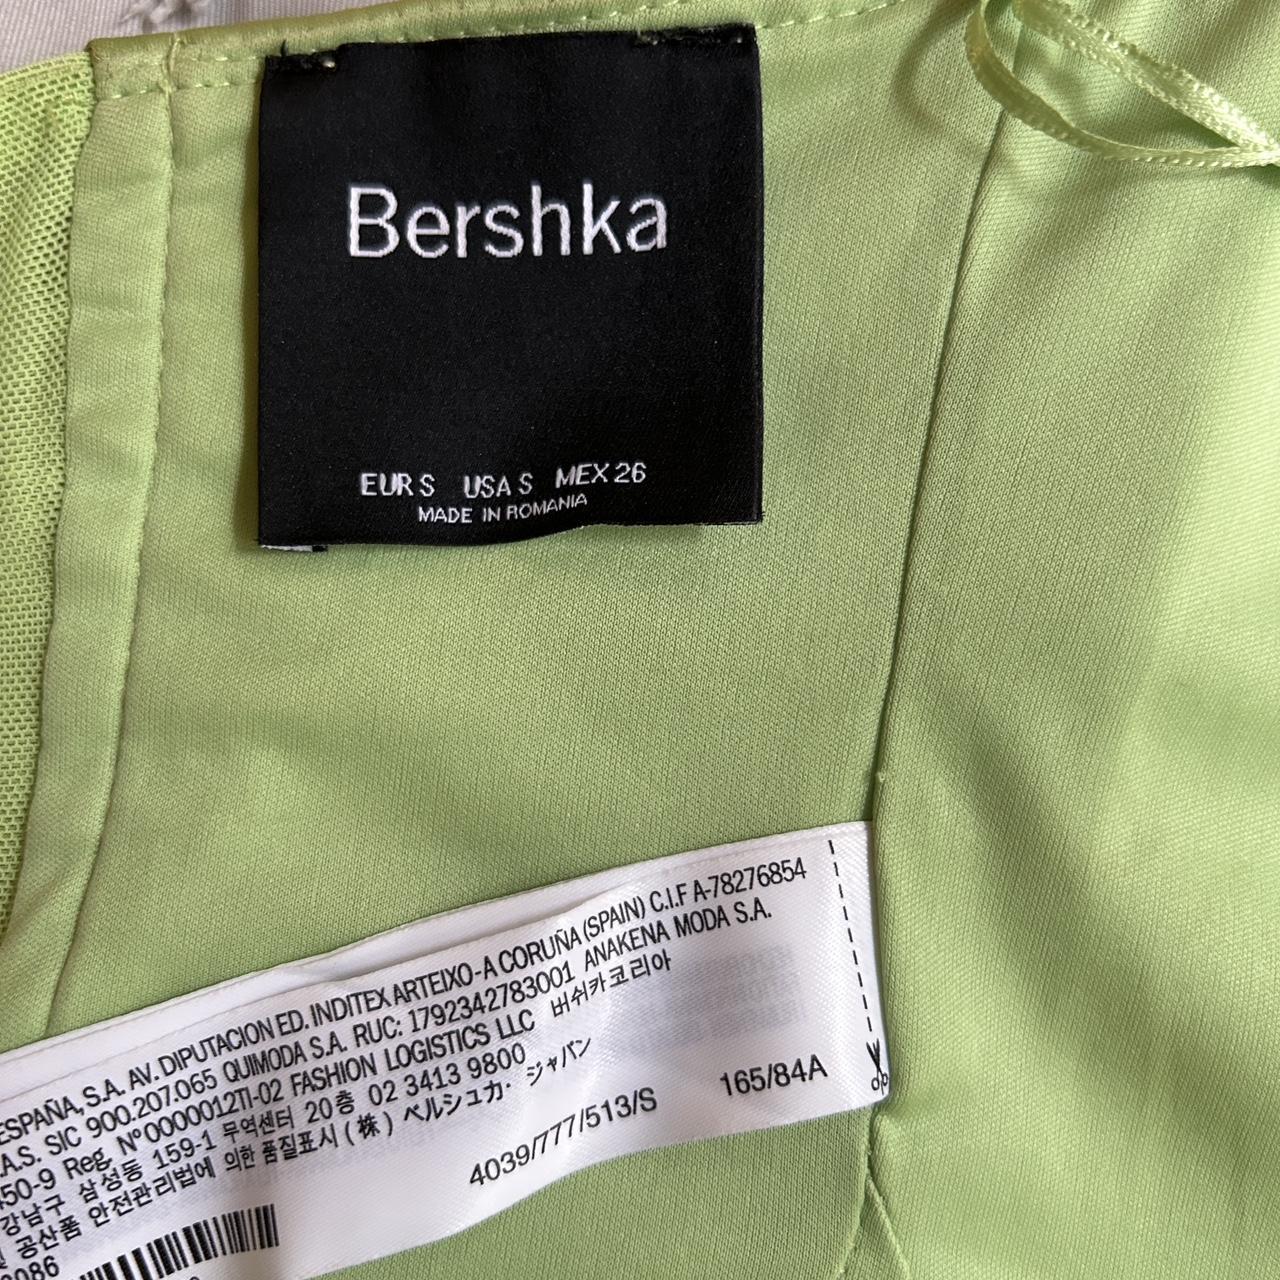 Bershka corset satin top in jade green